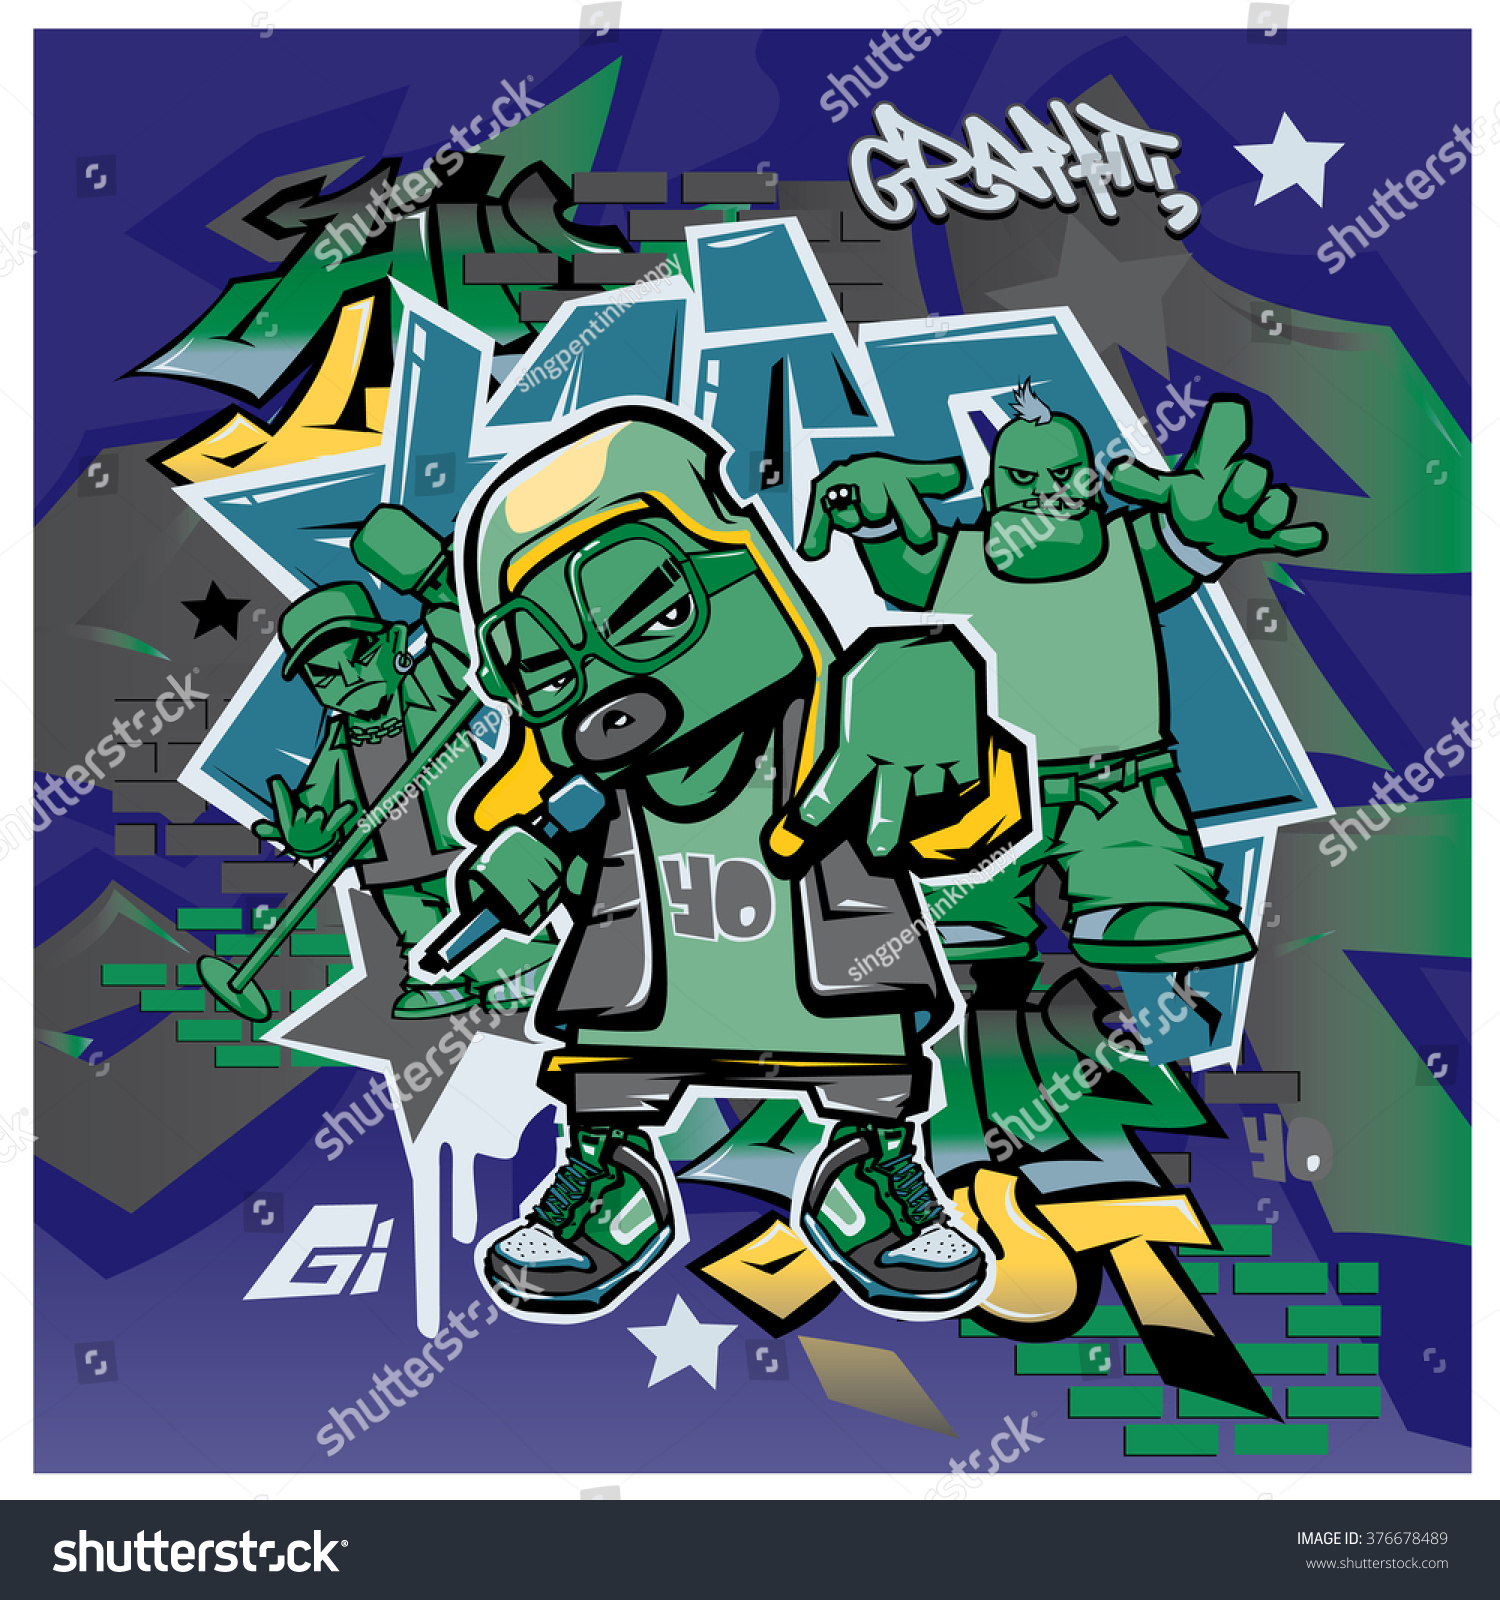 Vector Music Hip Hop Graffiti Style Stock Vector Royalty Free 376678489